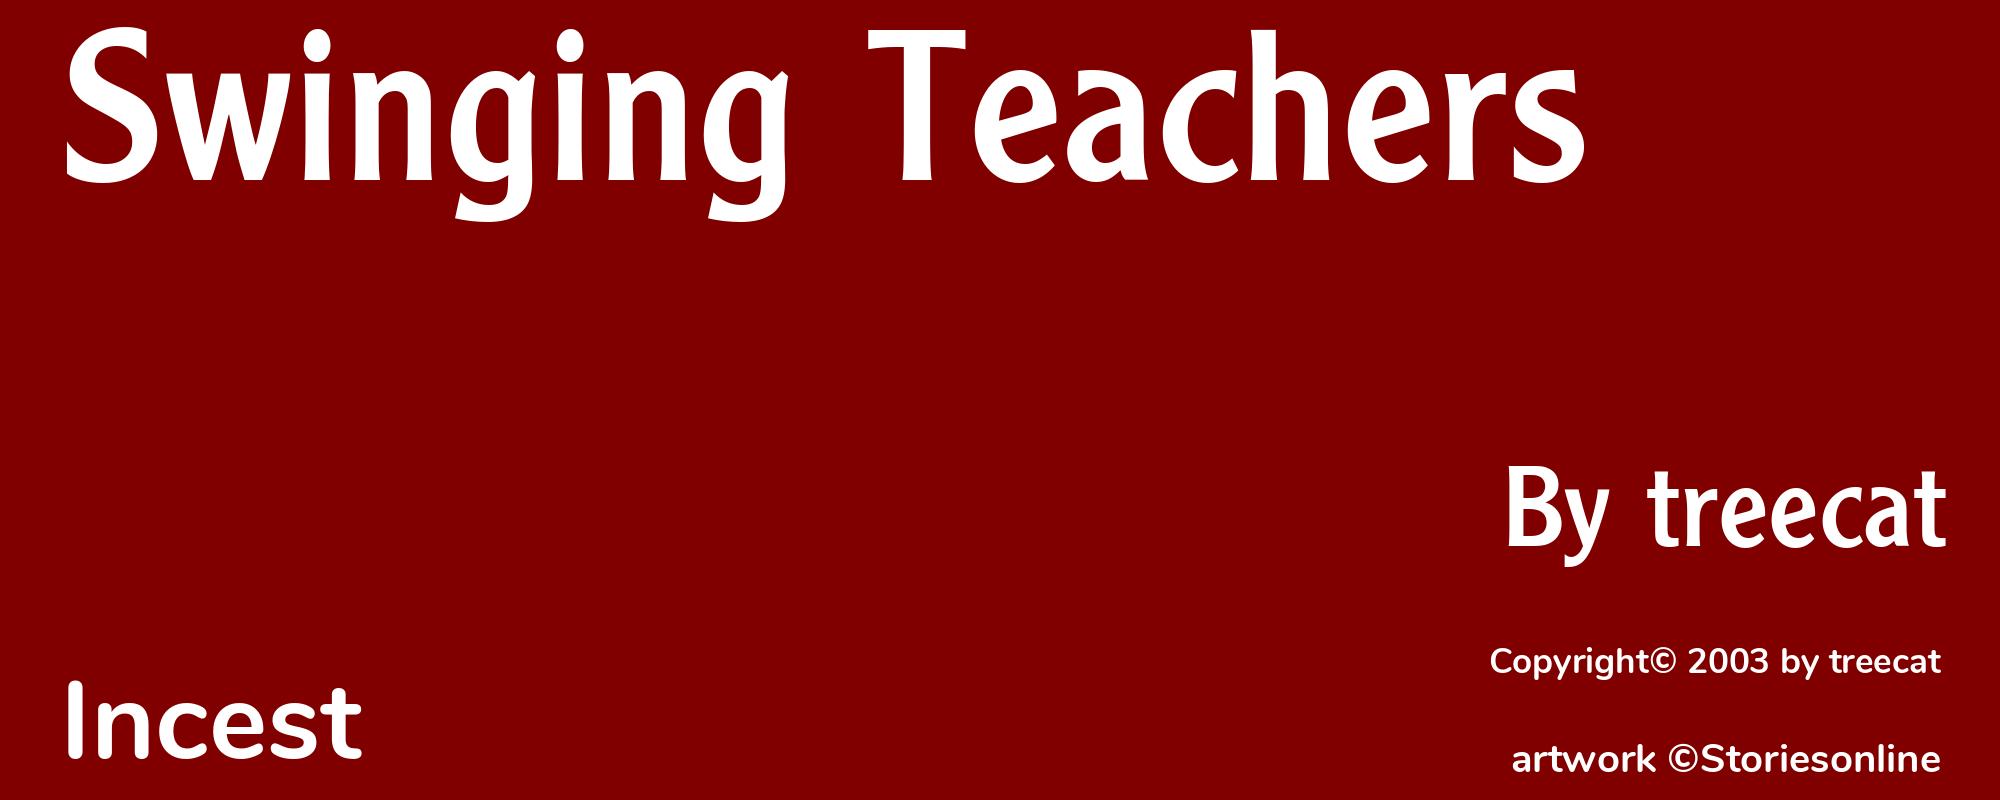 Swinging Teachers - Cover